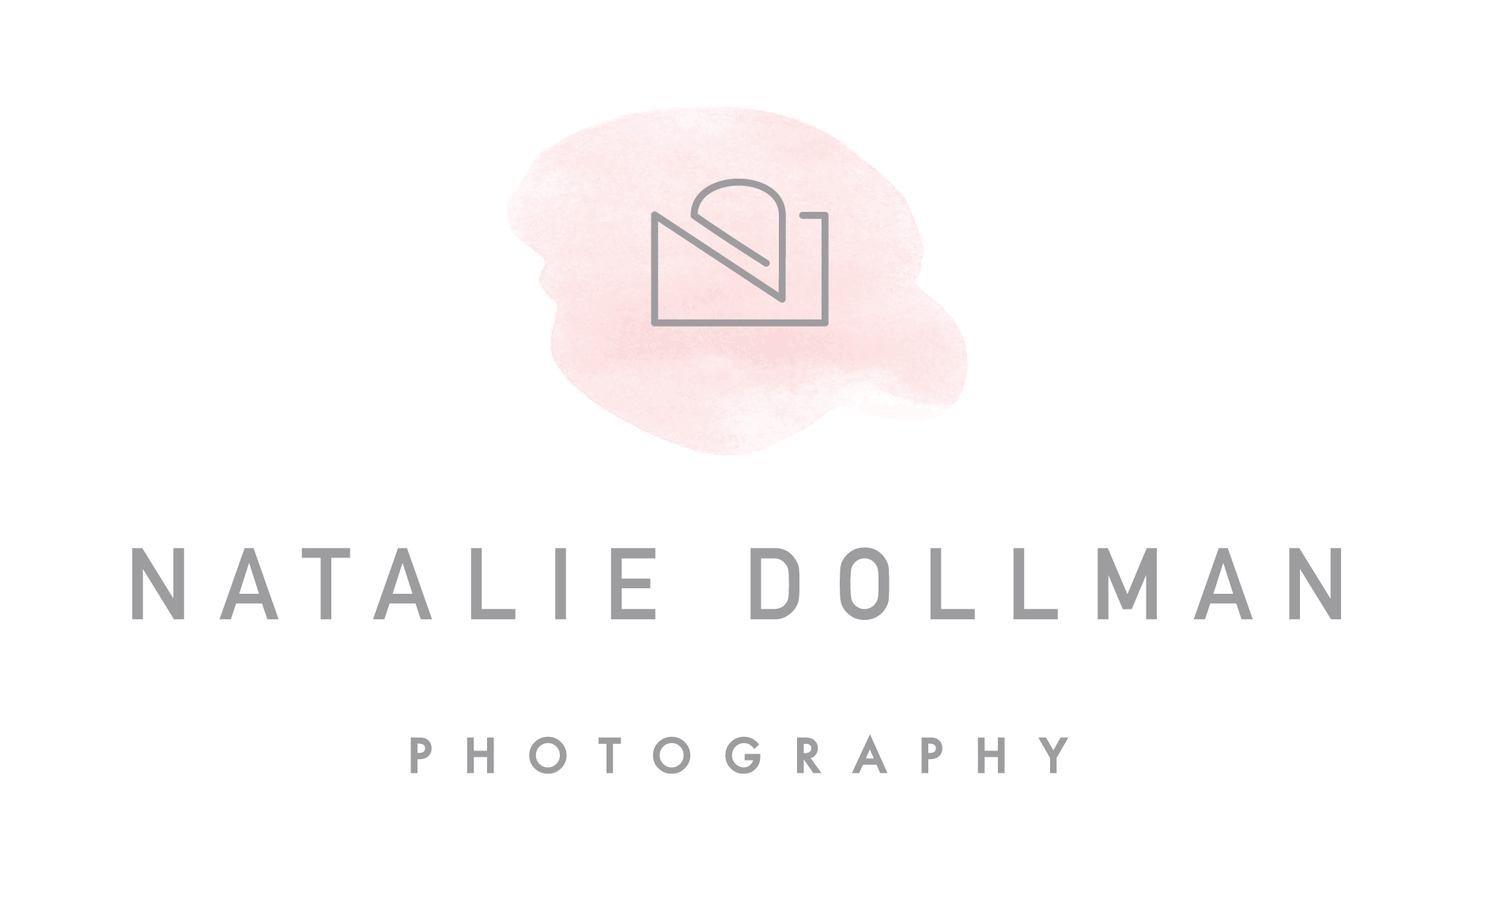 Natalie Dollman Photography